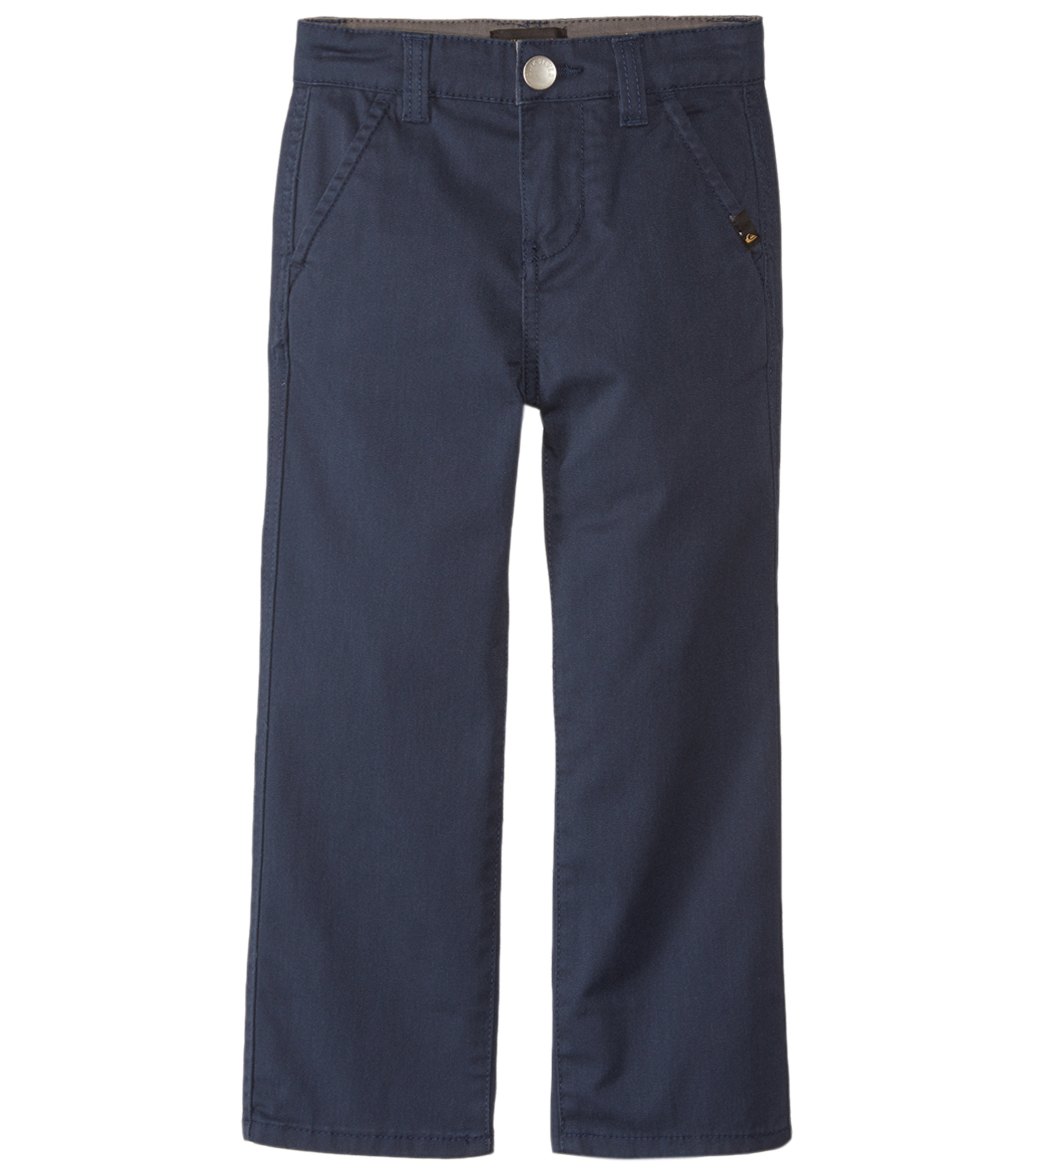 Quiksilver Boys' Everyday Union Pants 2T-7X - Navy Blazer 2T Cotton/Polyester - Swimoutlet.com